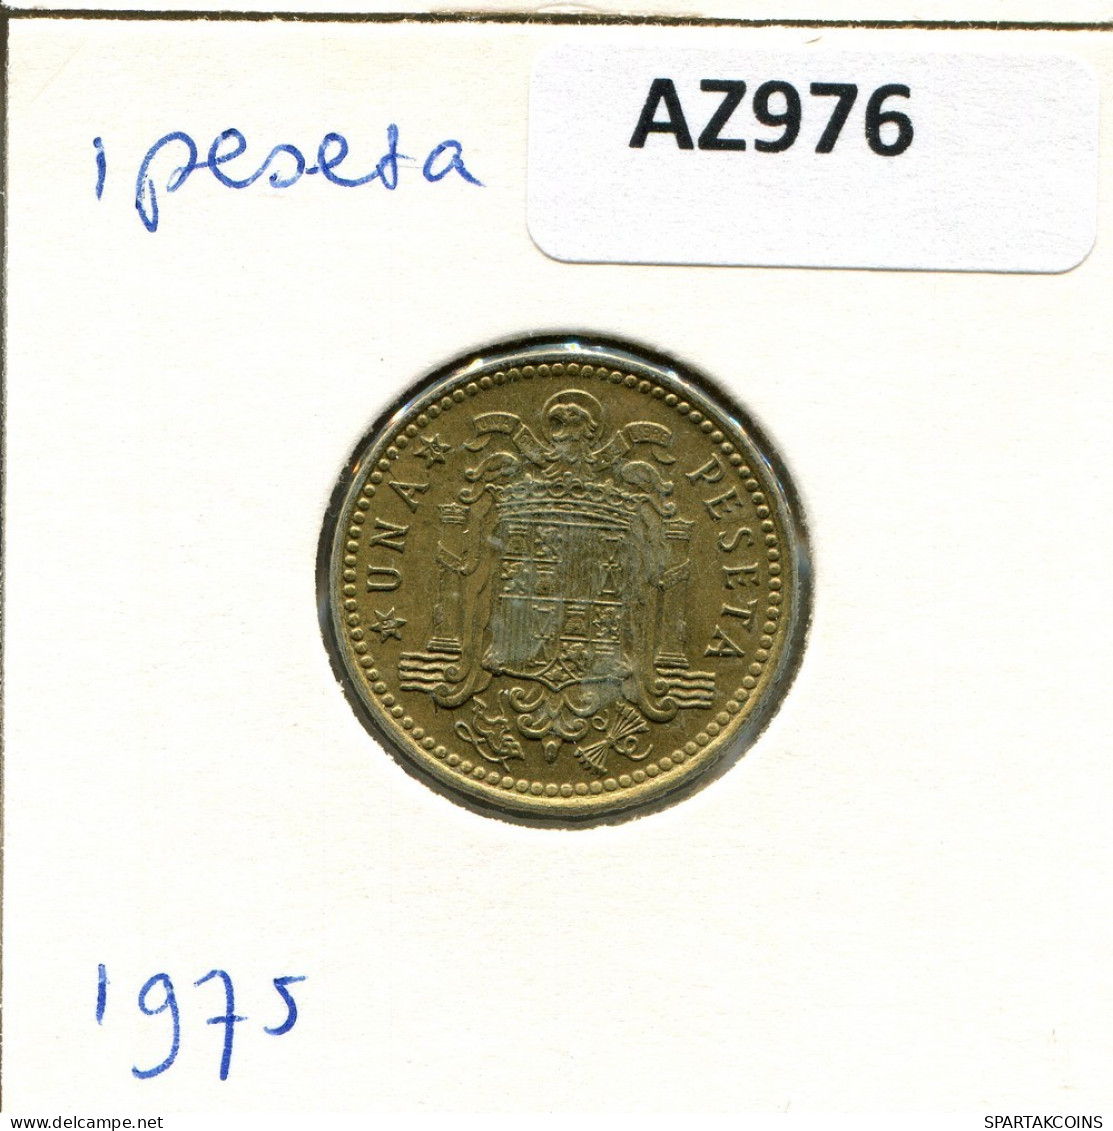 1 PESETA 1975 SPANIEN SPAIN Münze #AZ976.D.A - 1 Peseta